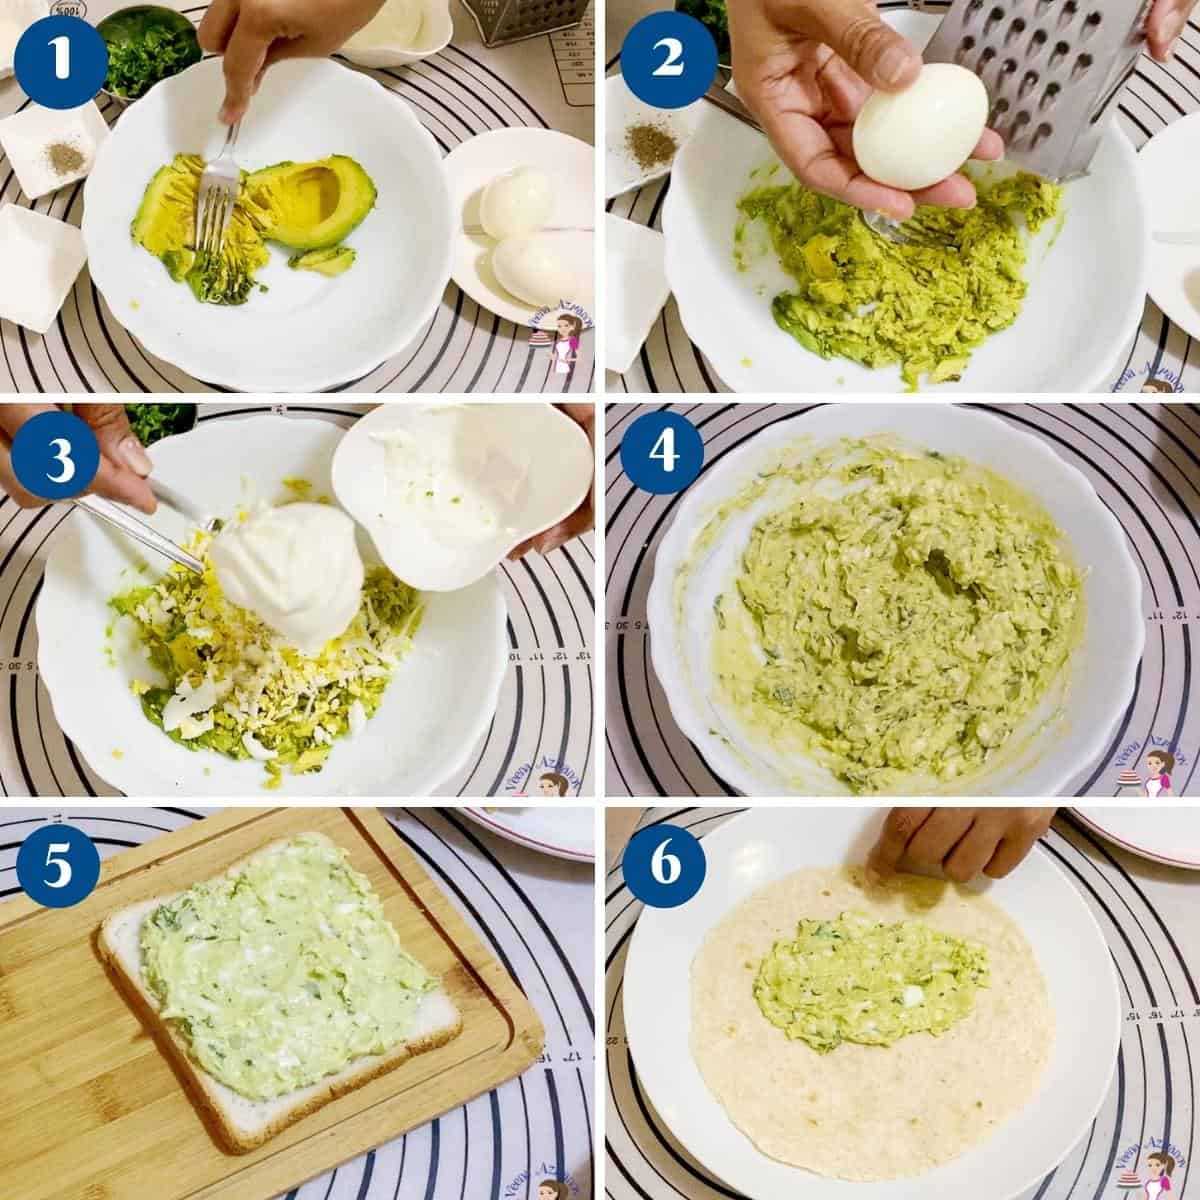 Progress pictures making avocado egg sandwich.